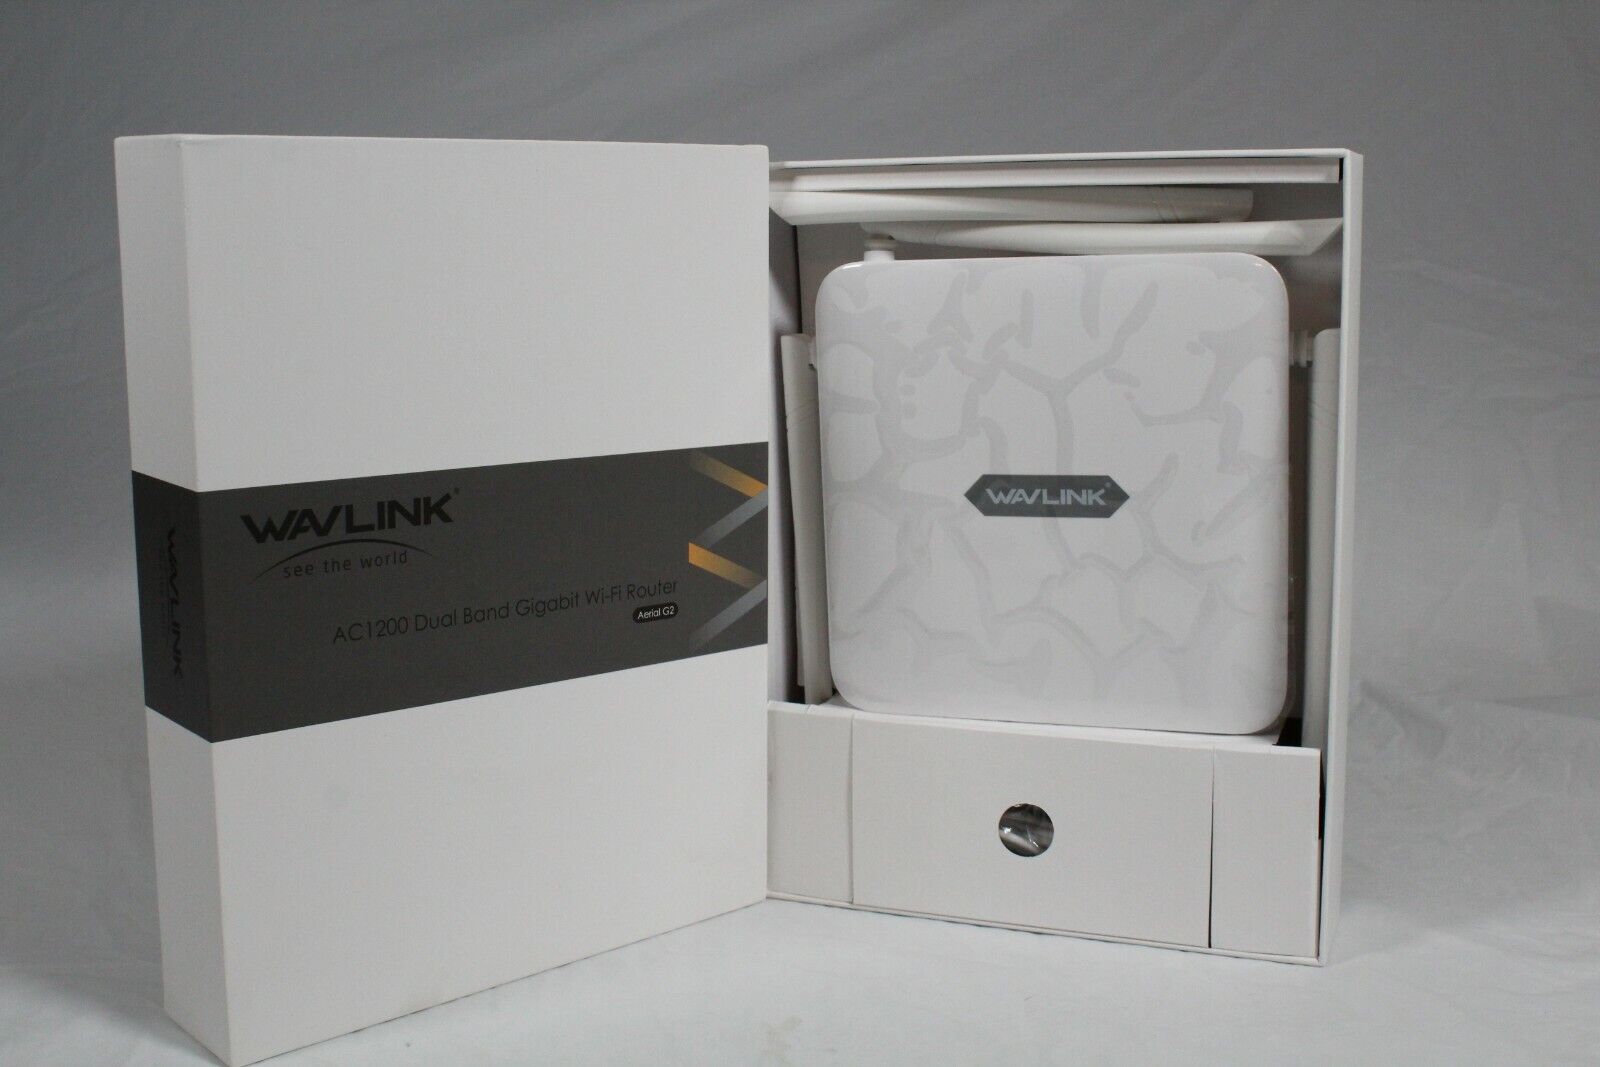 Wavlink AC1200 Dual Band Gigabit Wi-Fi Router, Aerial G2